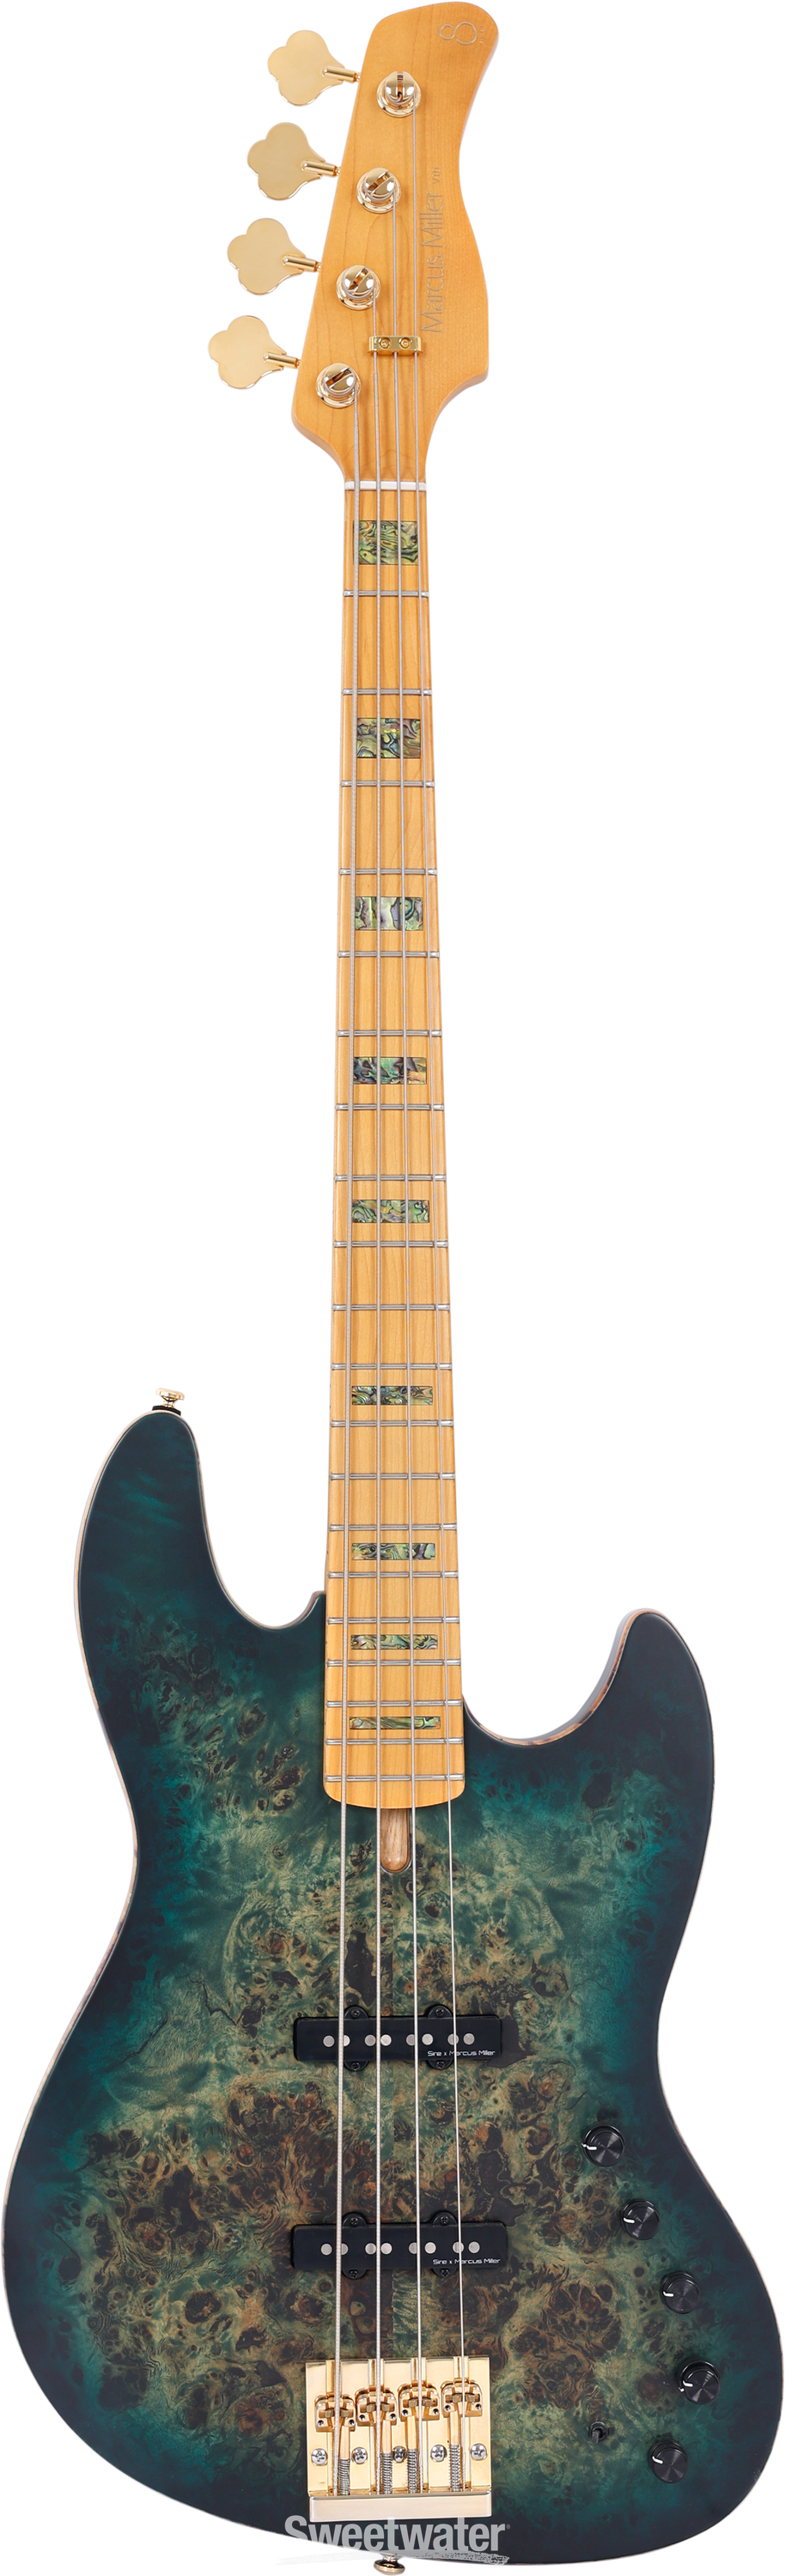 Sire Marcus Miller V10 4-string Bass Guitar - Trans Green Satin 